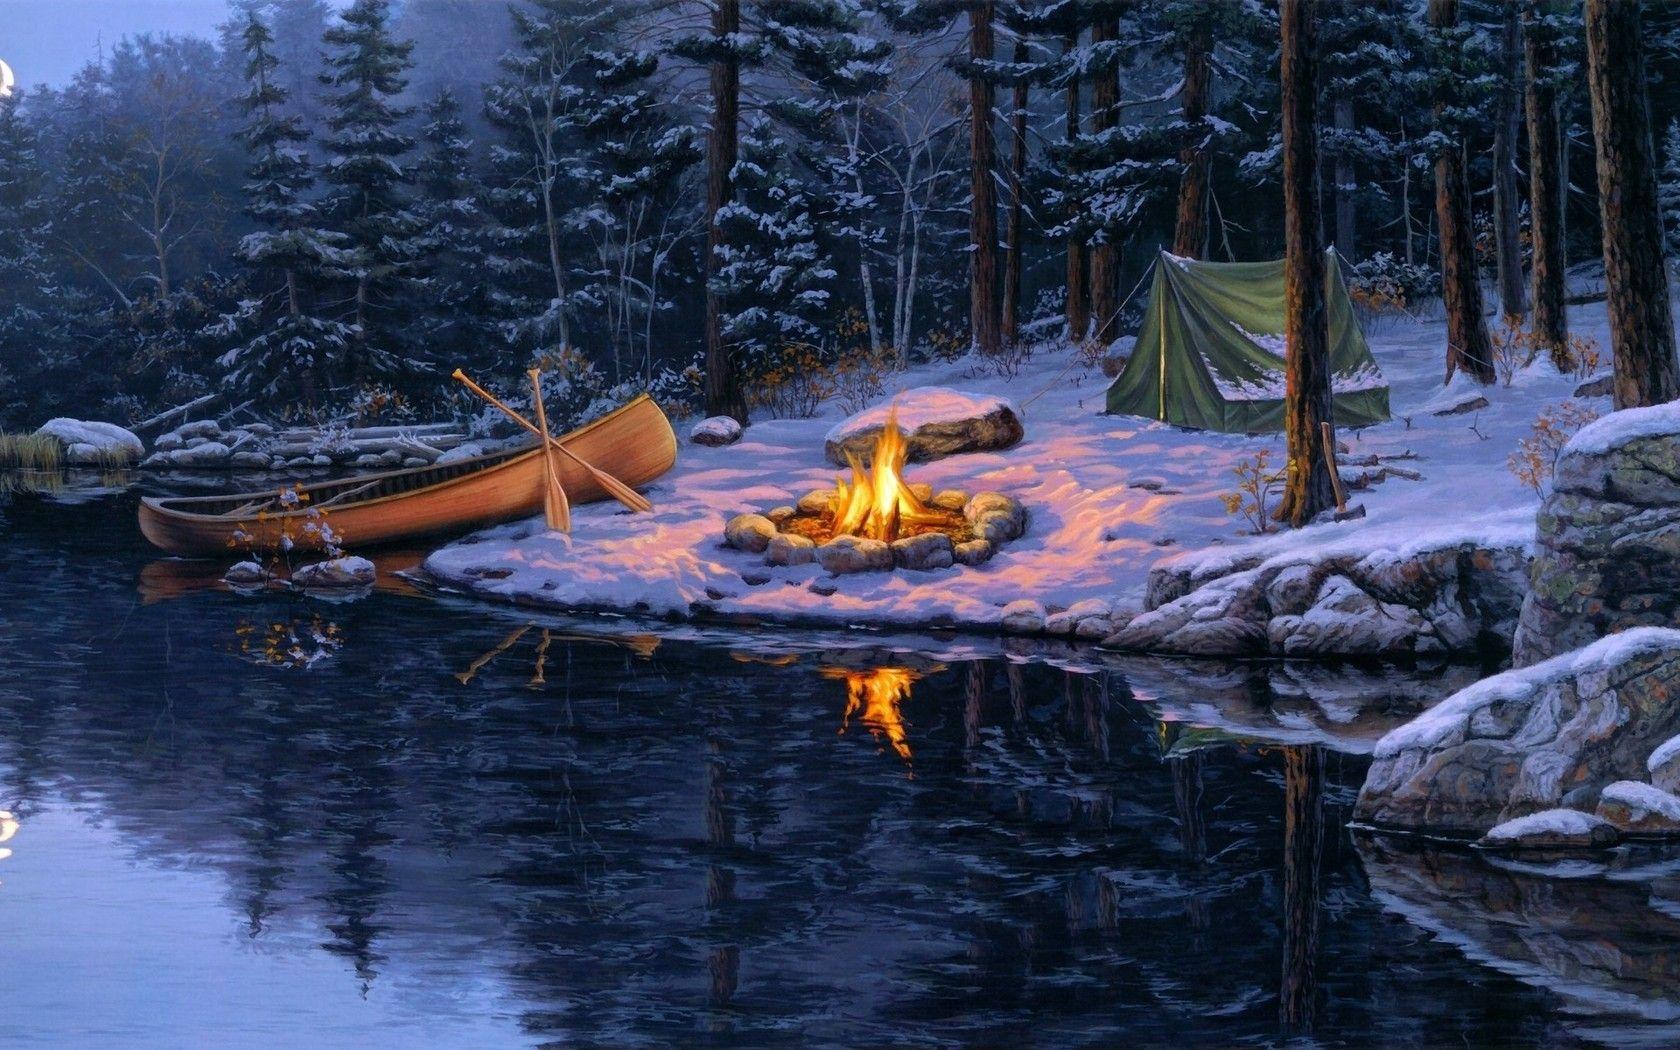 Background دریاچه هنگام زمستان و سفید پوش شدن زمین 